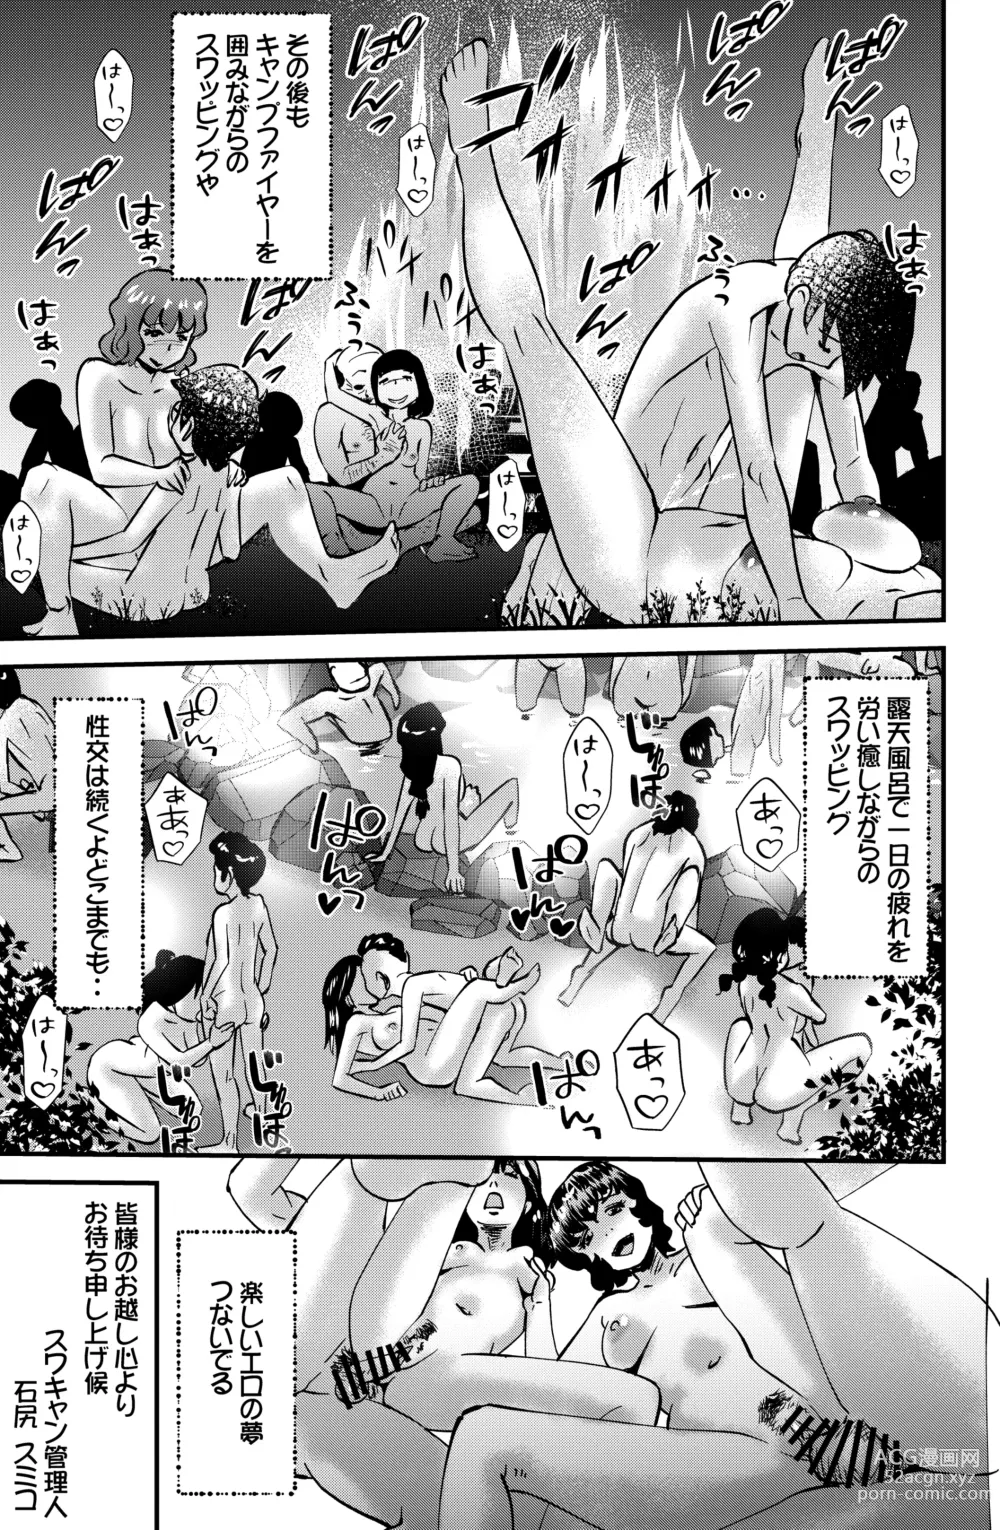 Page 29 of doujinshi Kazoku Camp 2